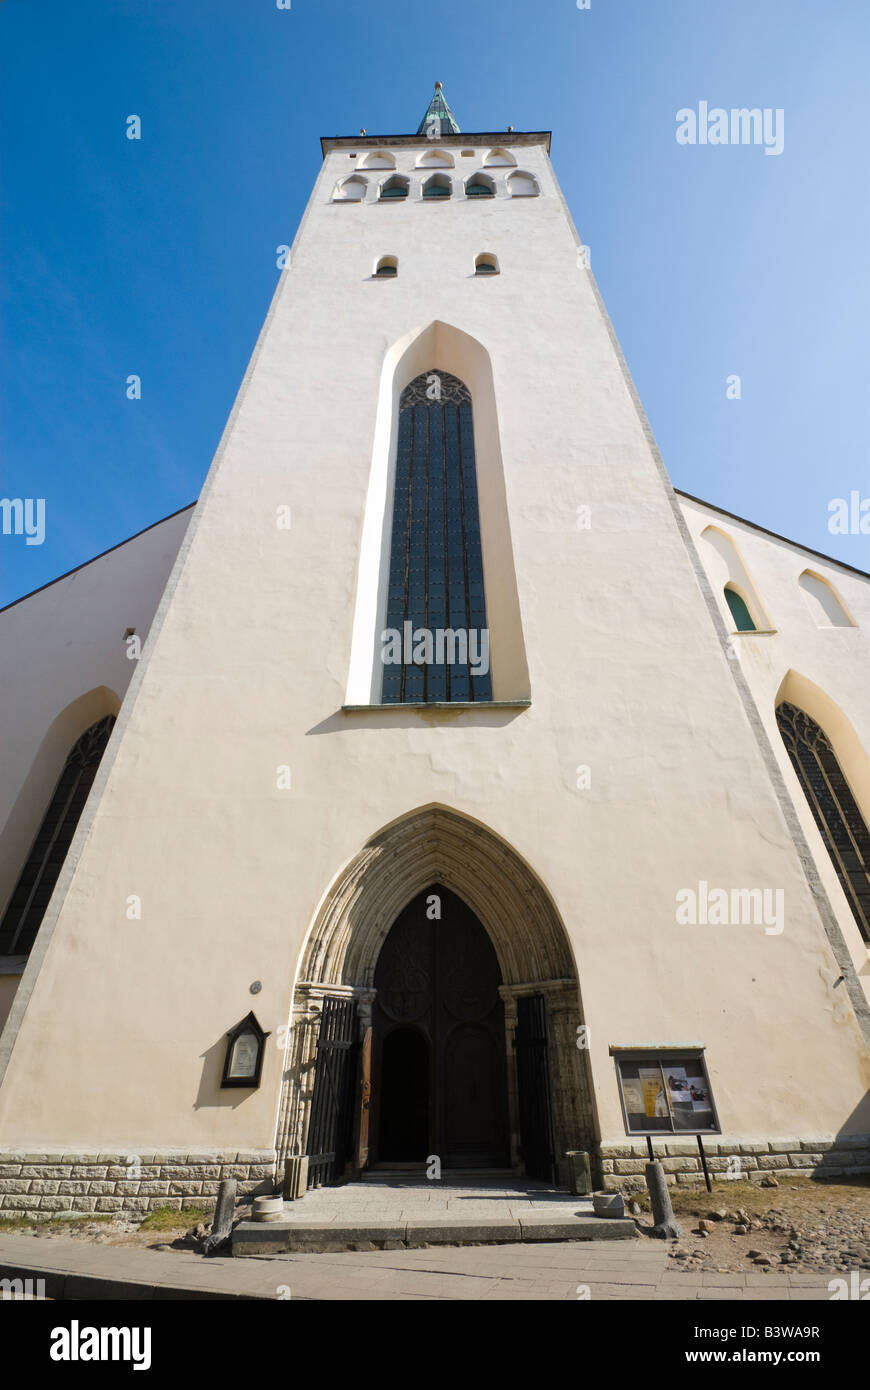 St Olaf's Church, Tallinn, Estonia. Stock Photo